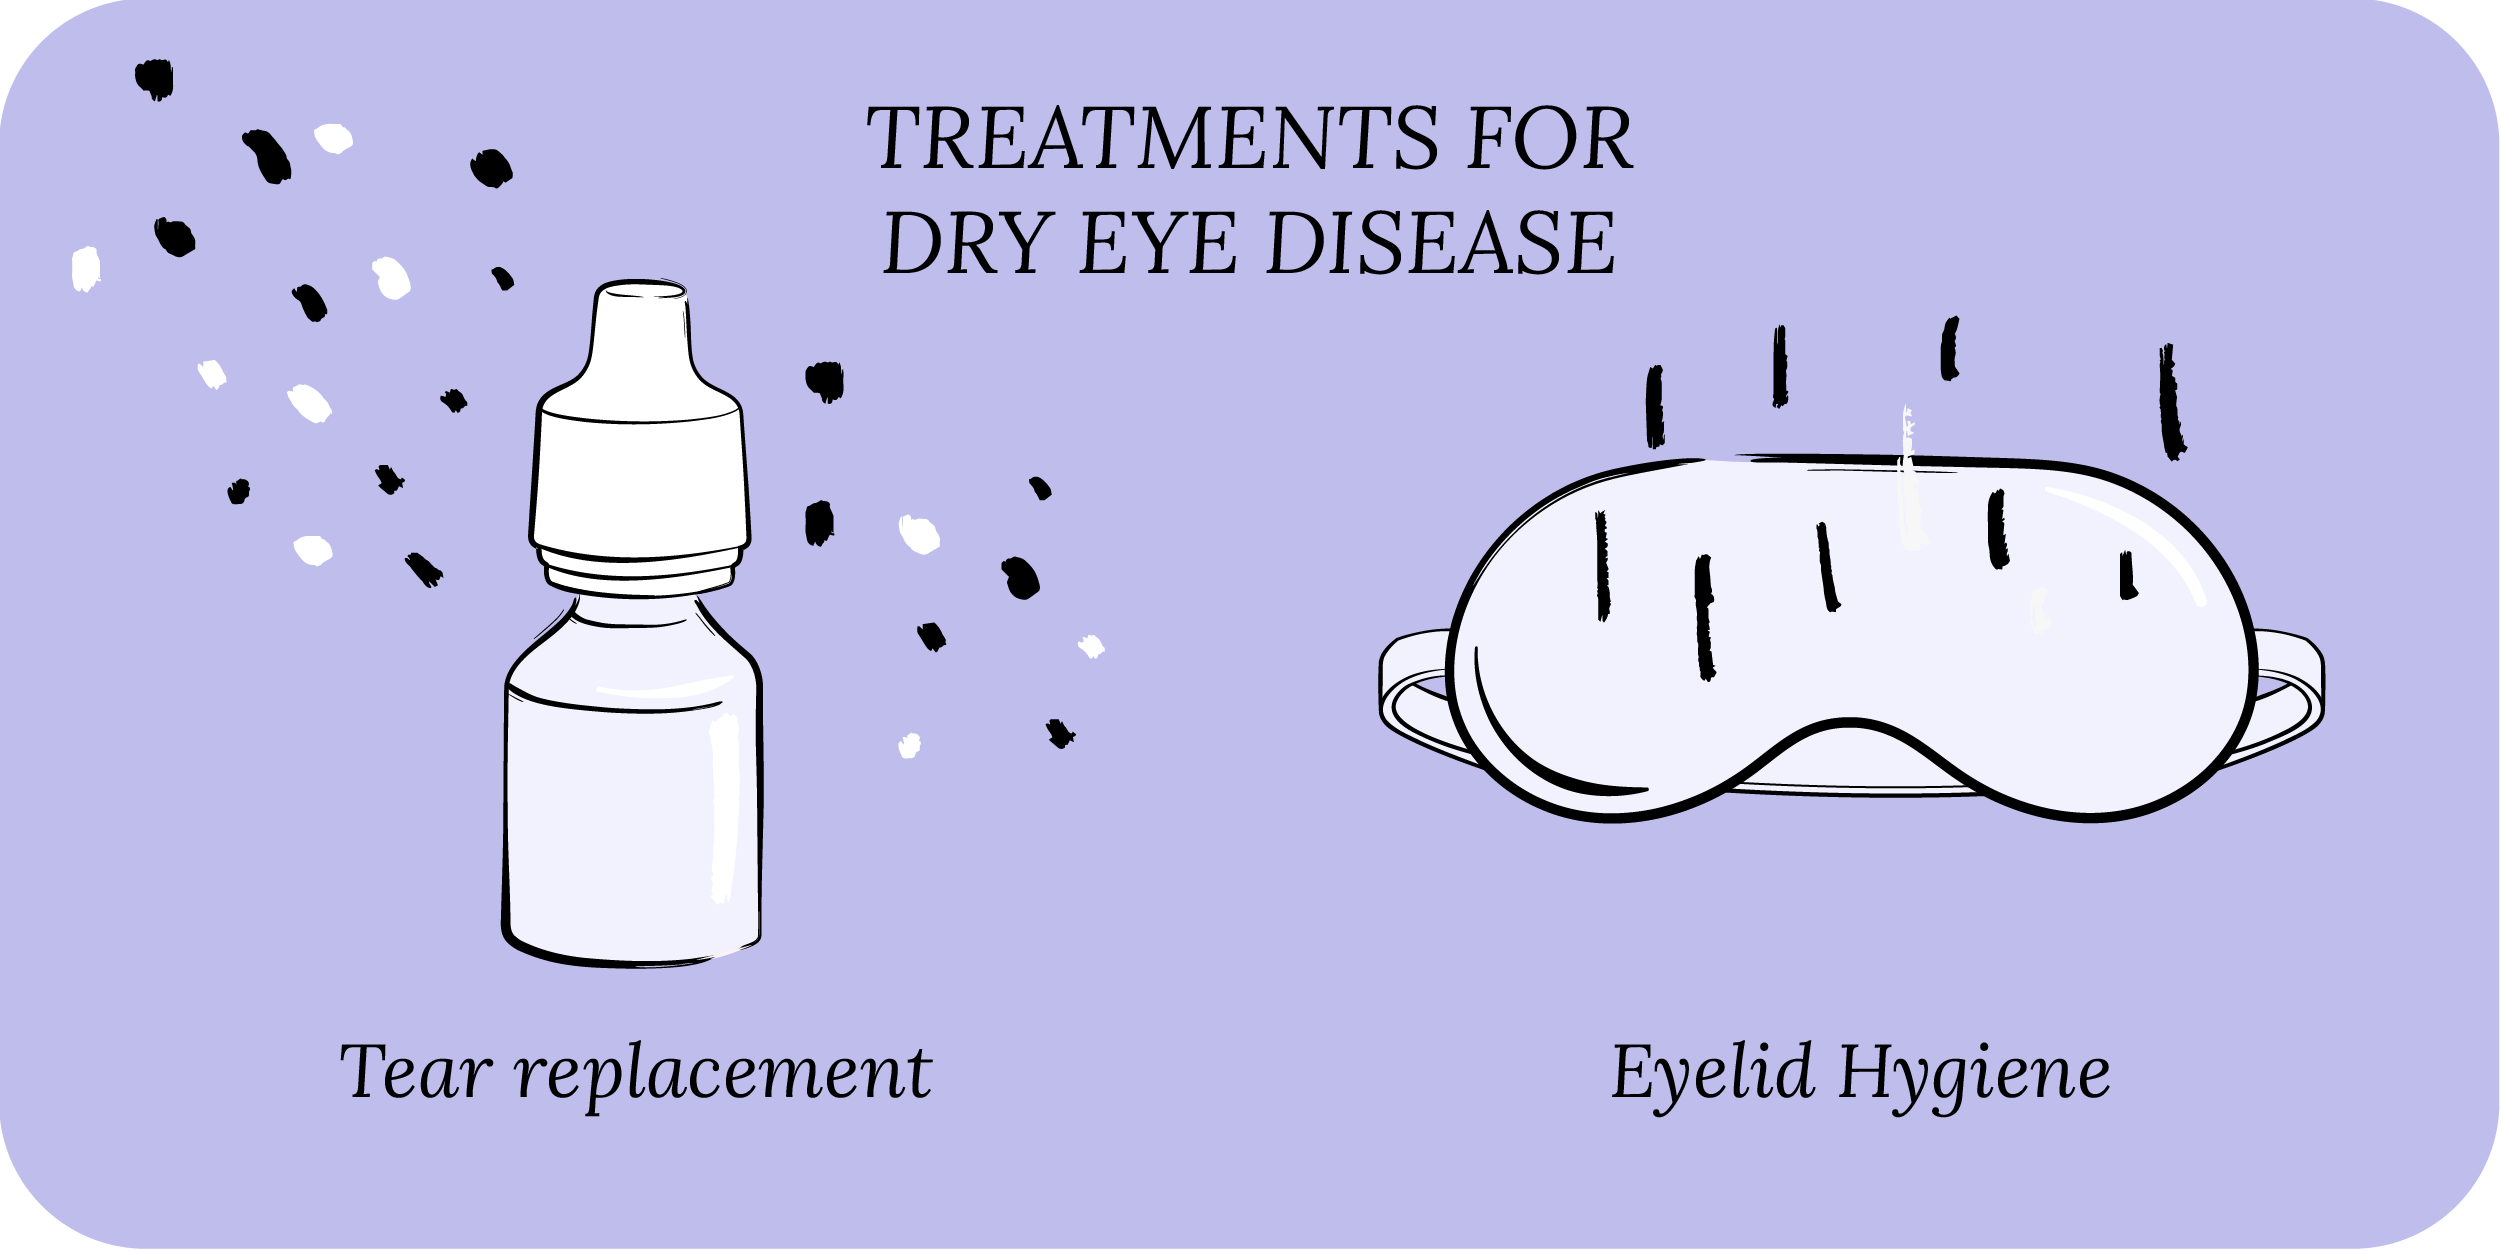 Treatments for dry eye disease